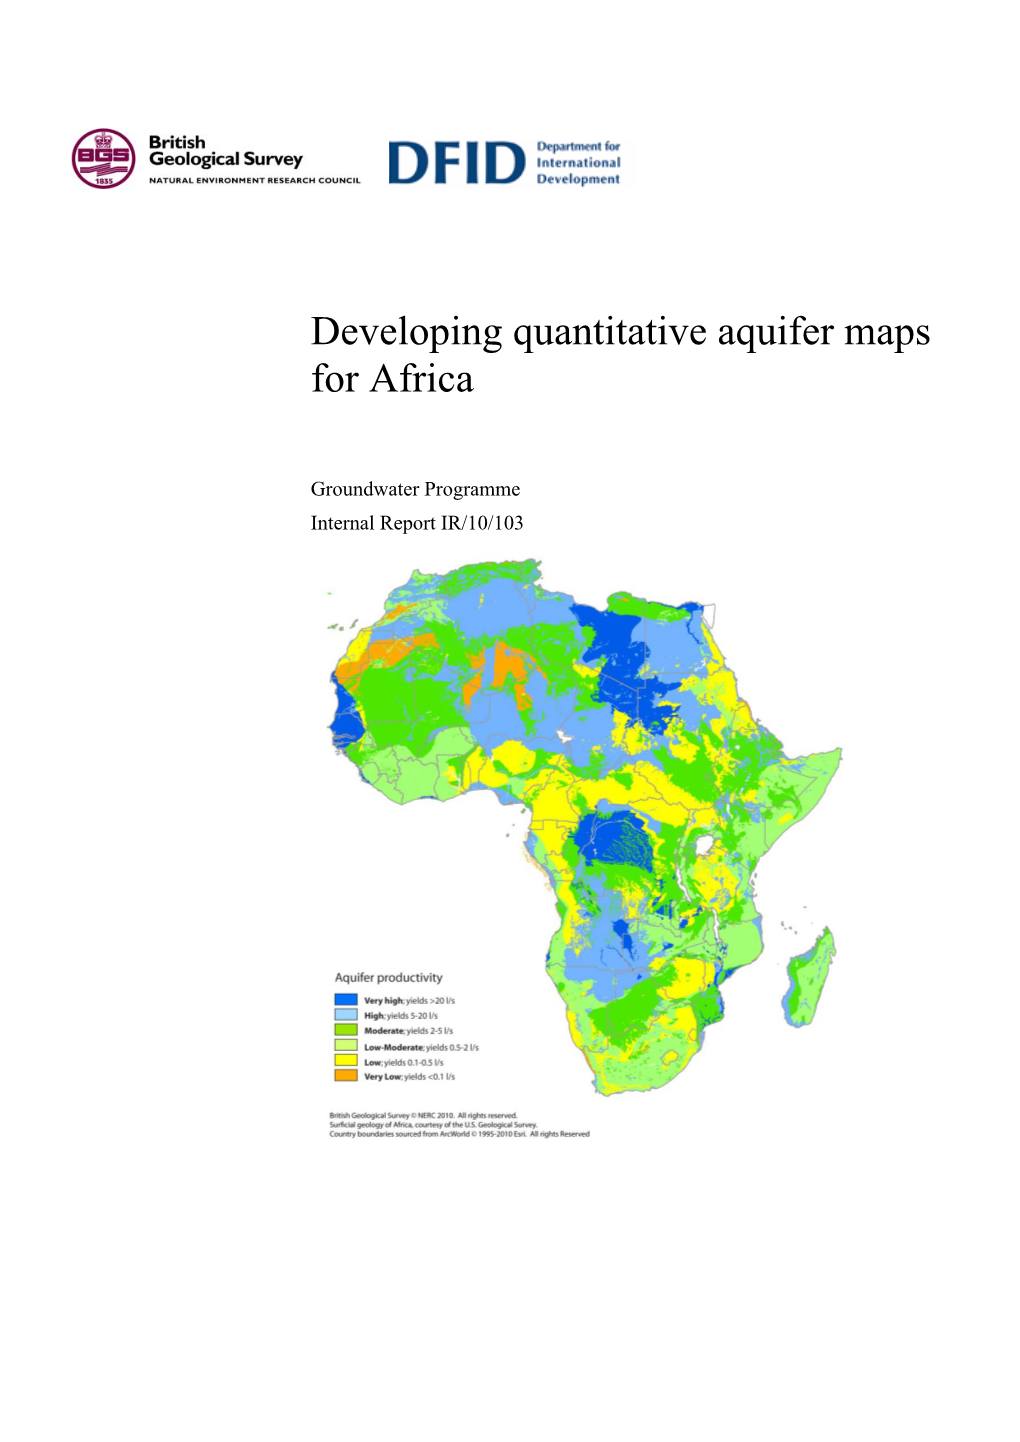 Developing Quantitative Aquifer Maps for Africa